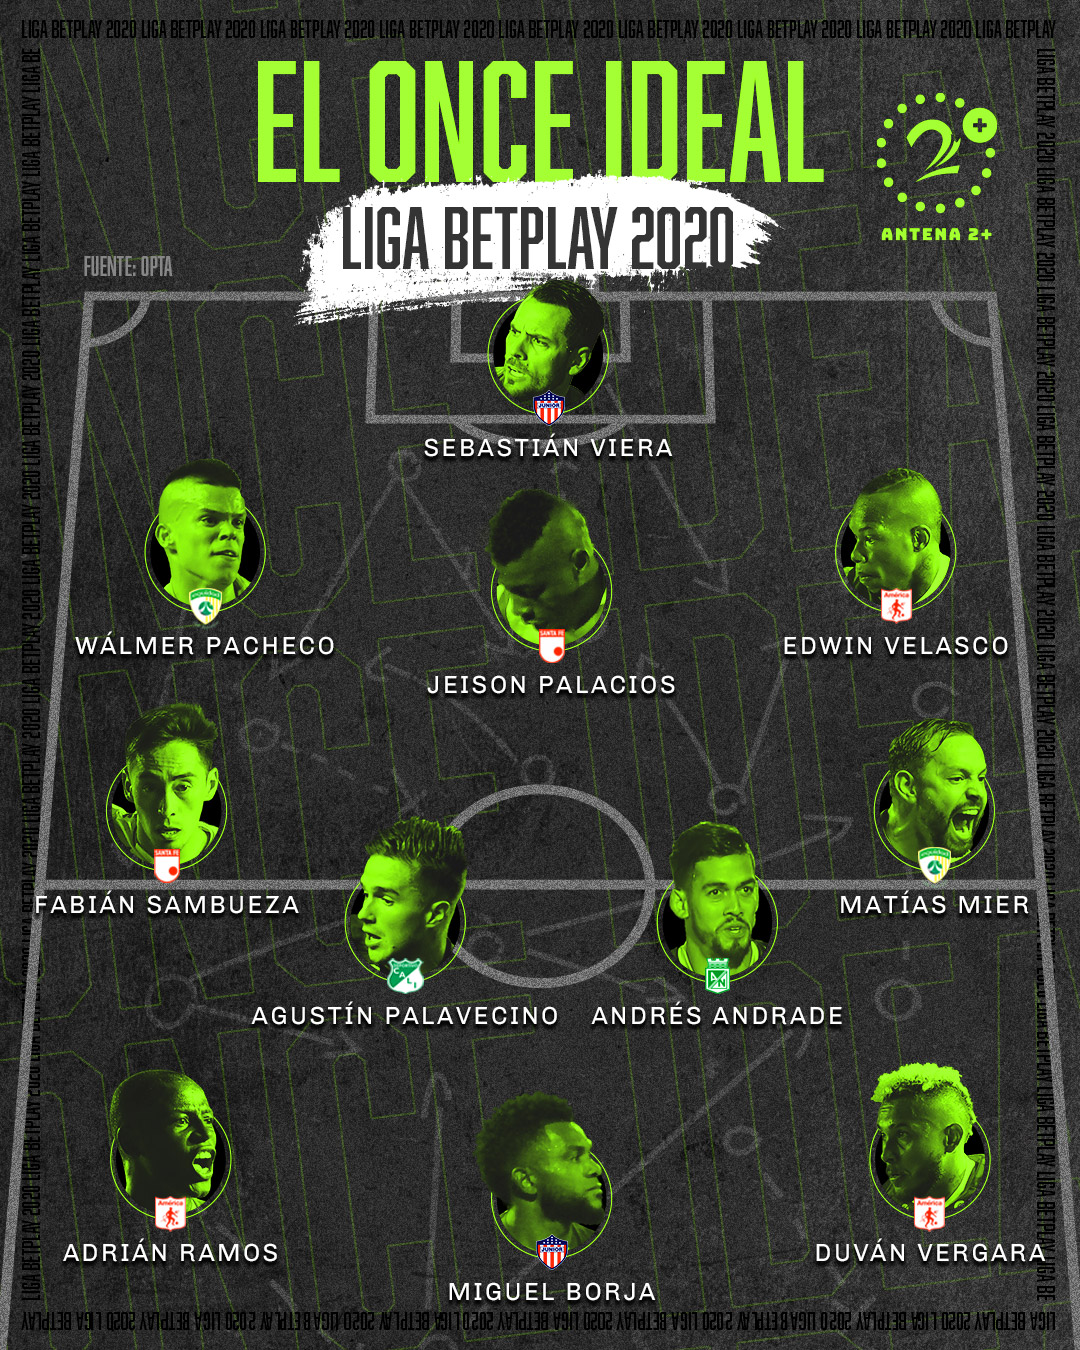 Once ideal Liga Betplay 2020